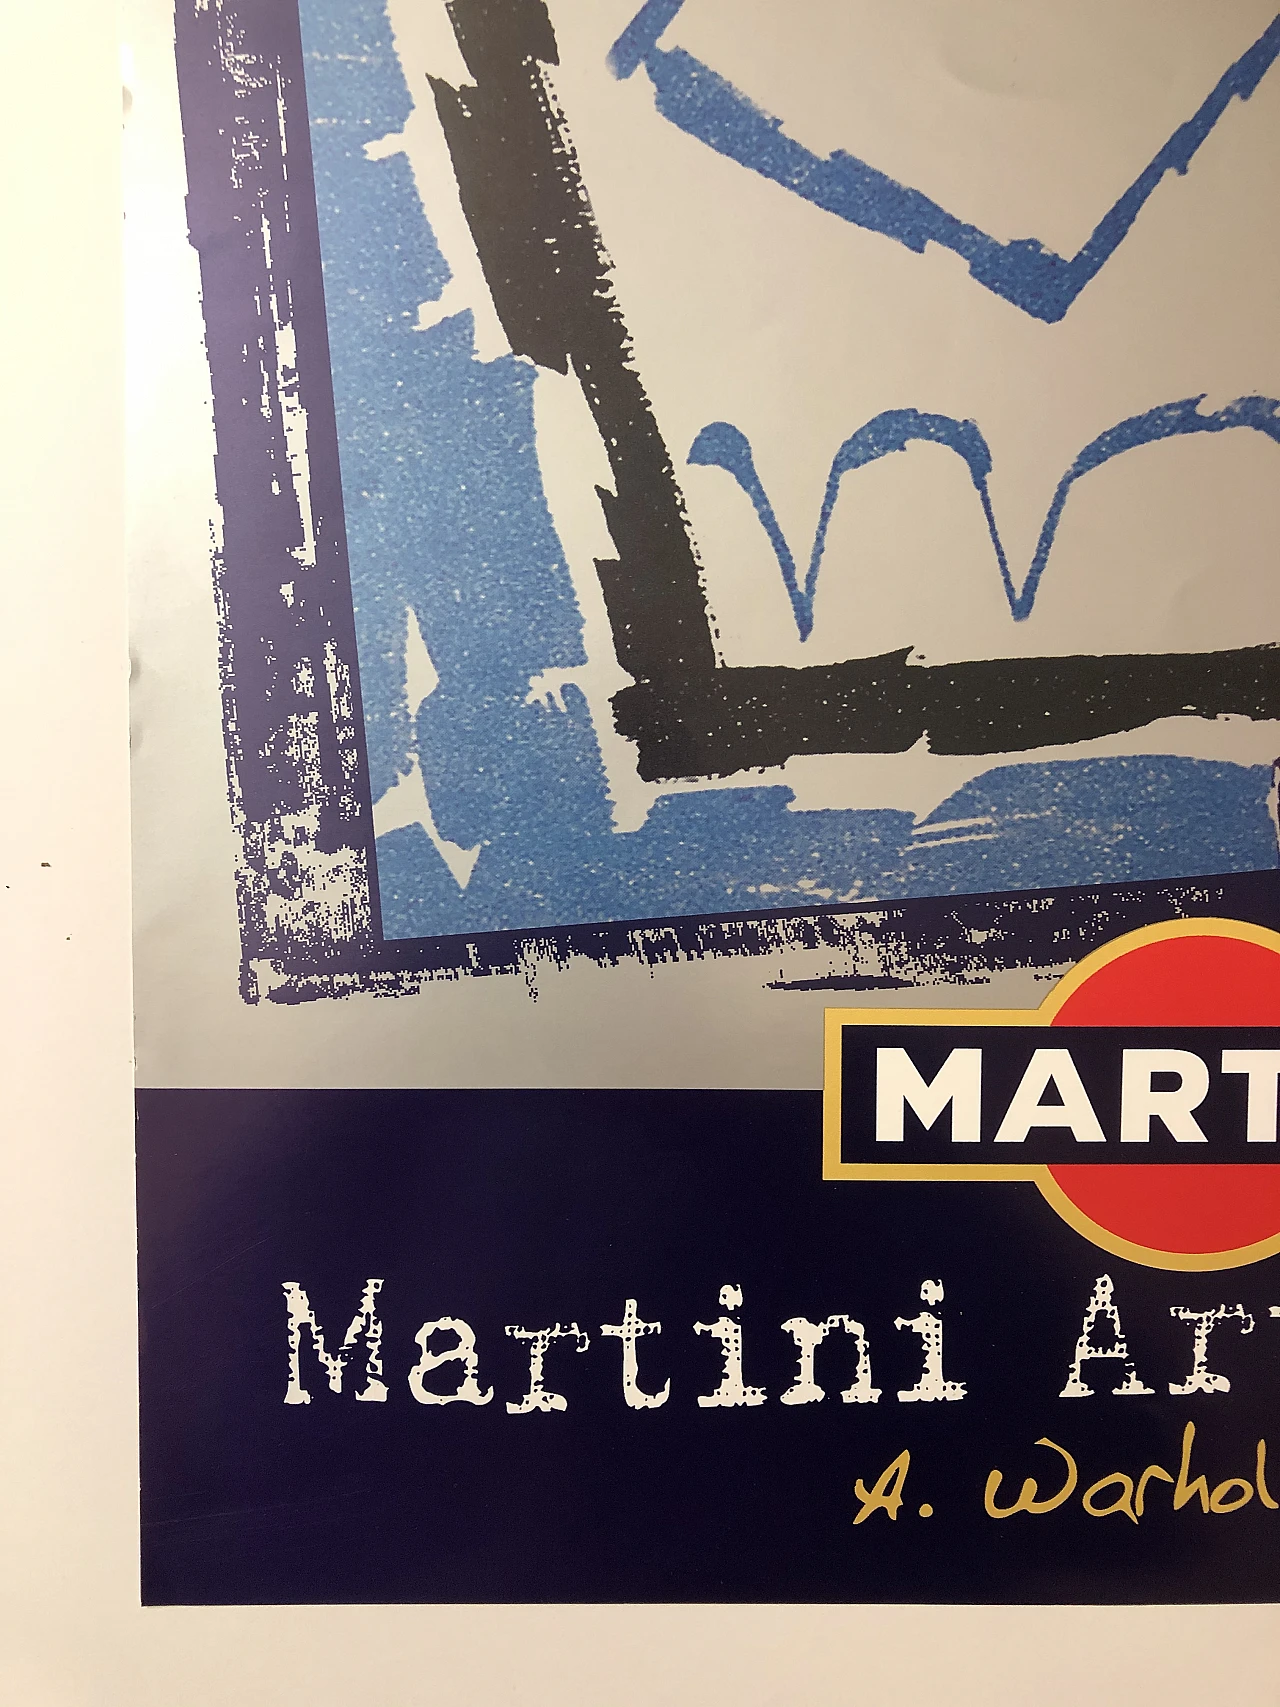 Da Andy Warhol, Martini Art Gallery, litografia, 2001 5